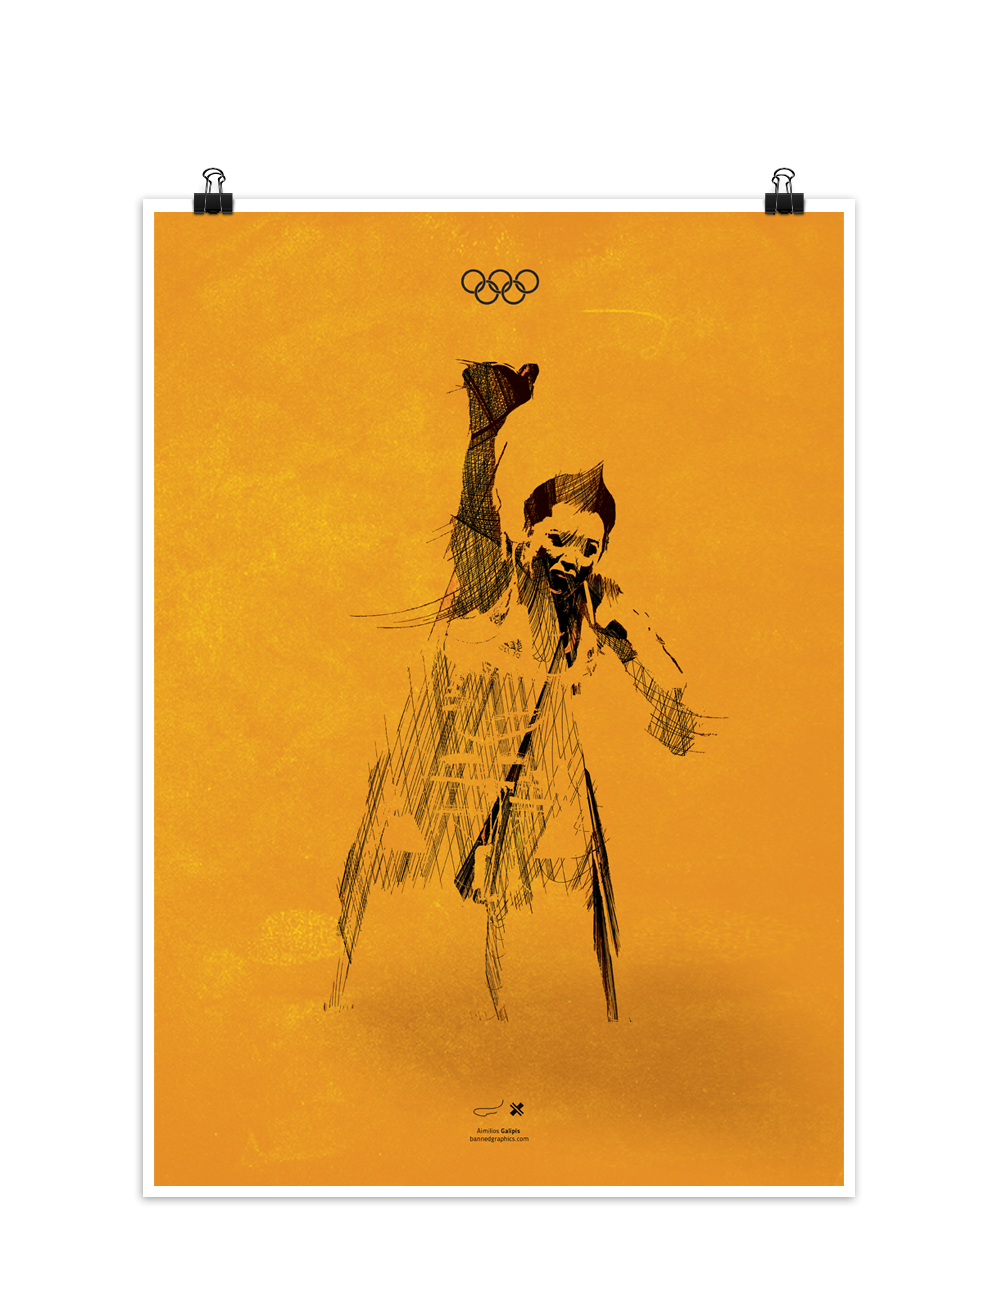 print poster Exhibition  award reggae contest design abstract Scrible lines camvas portrait